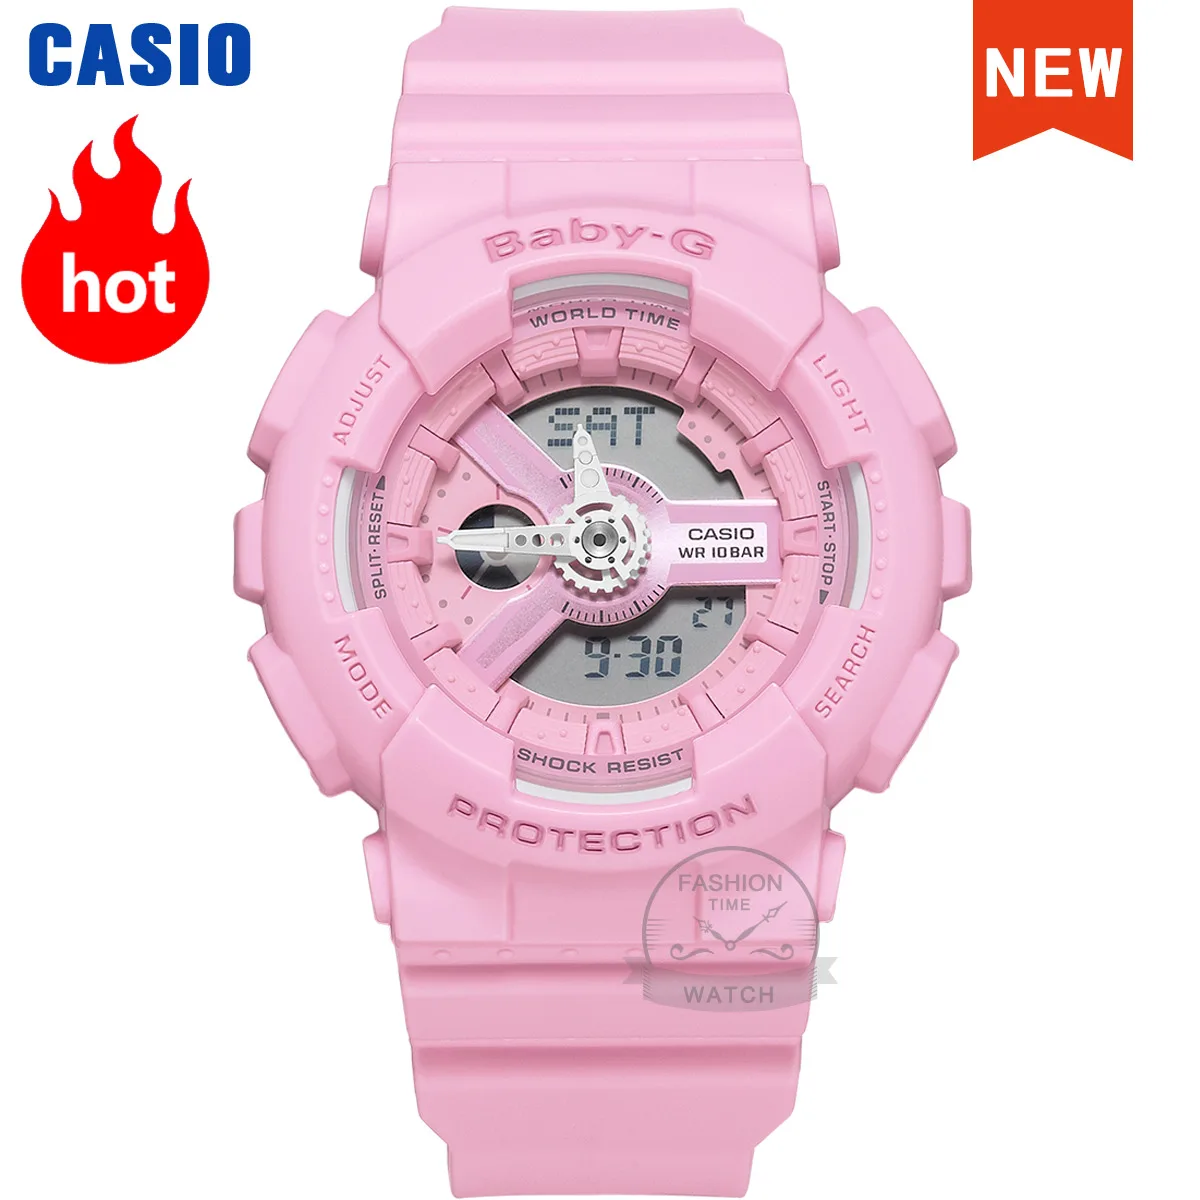 Casio watch for women  baby-g Cherry Blossom Pink Vibrant youth LED digital watch sport quartz watch часы мужские BA-110-4A1